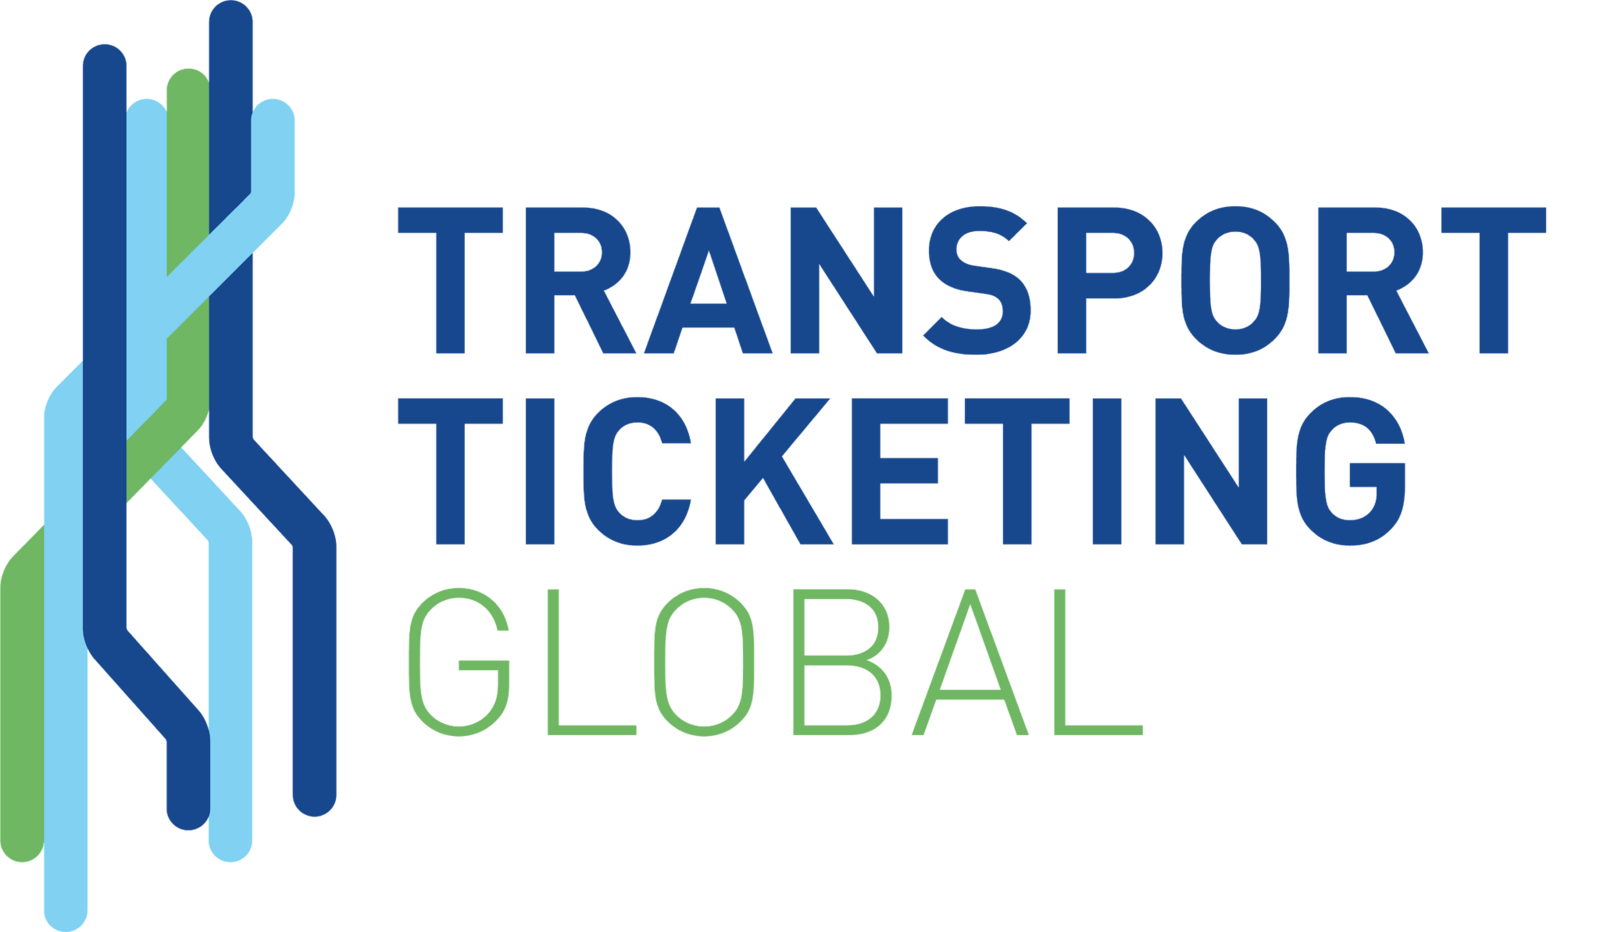 Cubic sponsors Transport Ticketing Global 2020